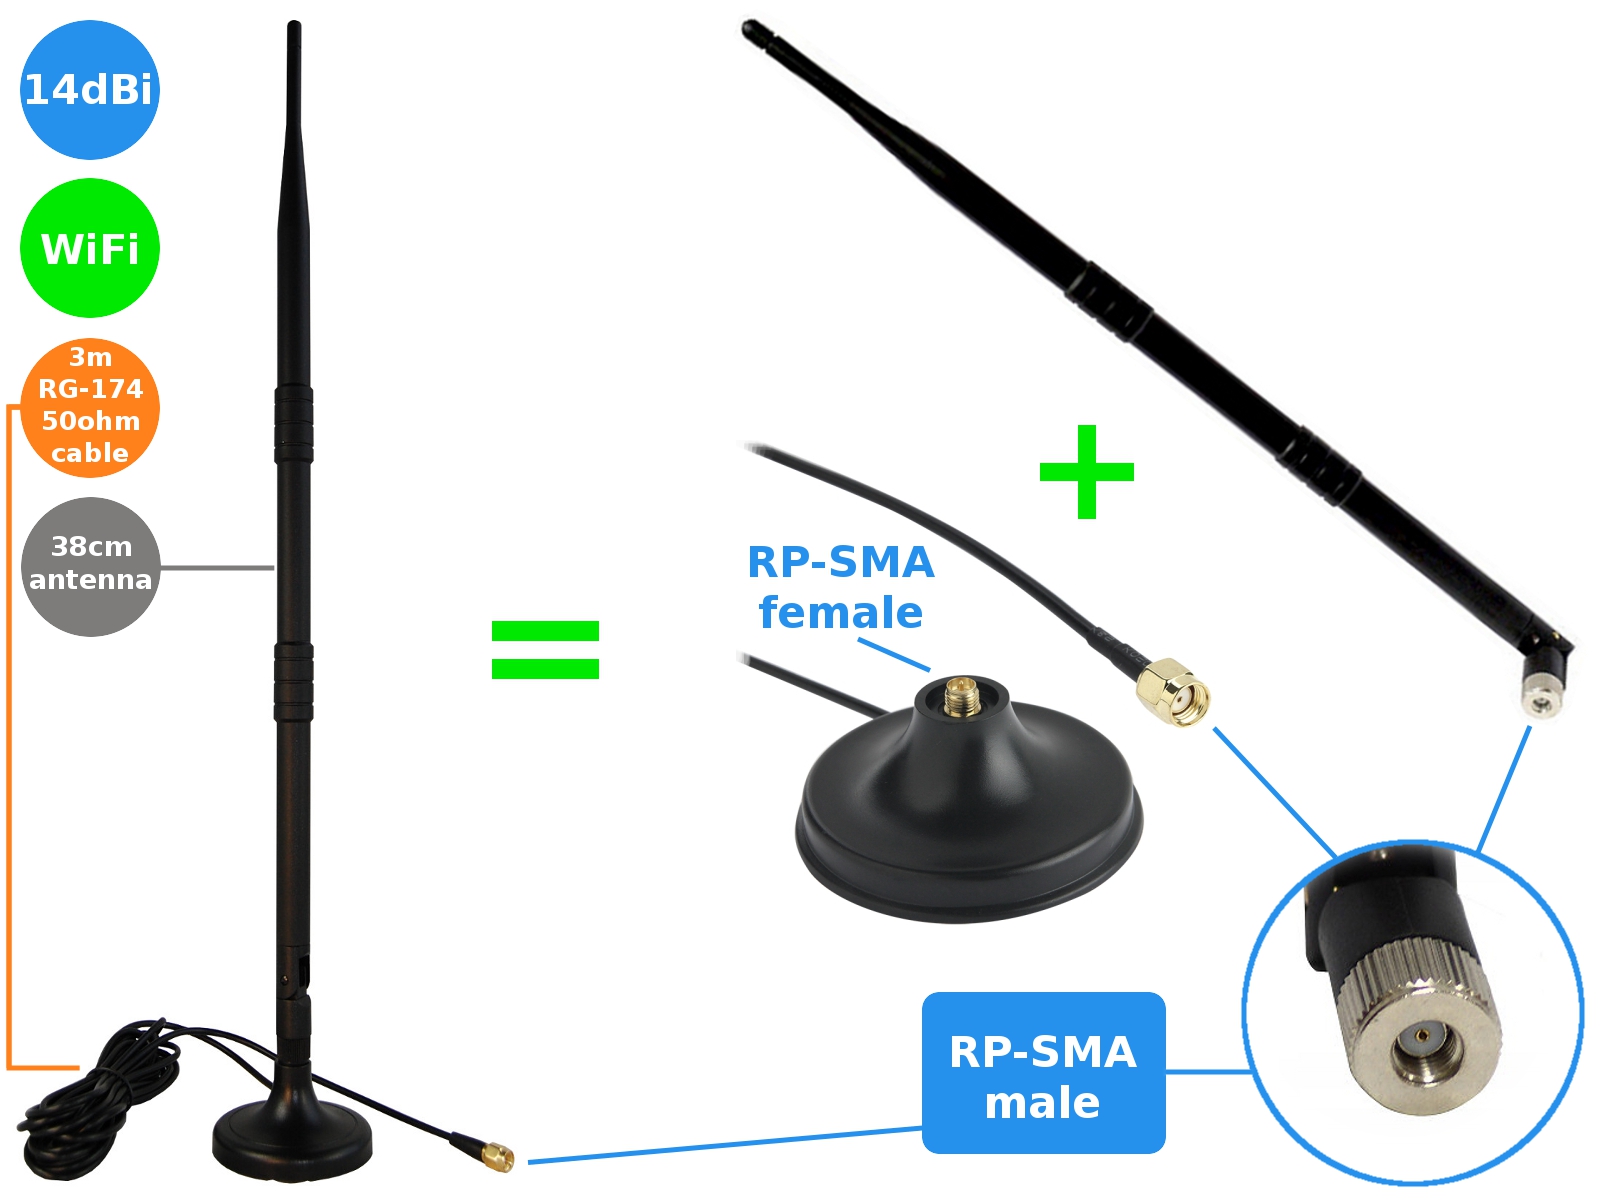 NTR ANT05 14dBi WiFi antenna 38cm RP-SMA dugó + RP-SMA mágneses állvány 3m kábellel 